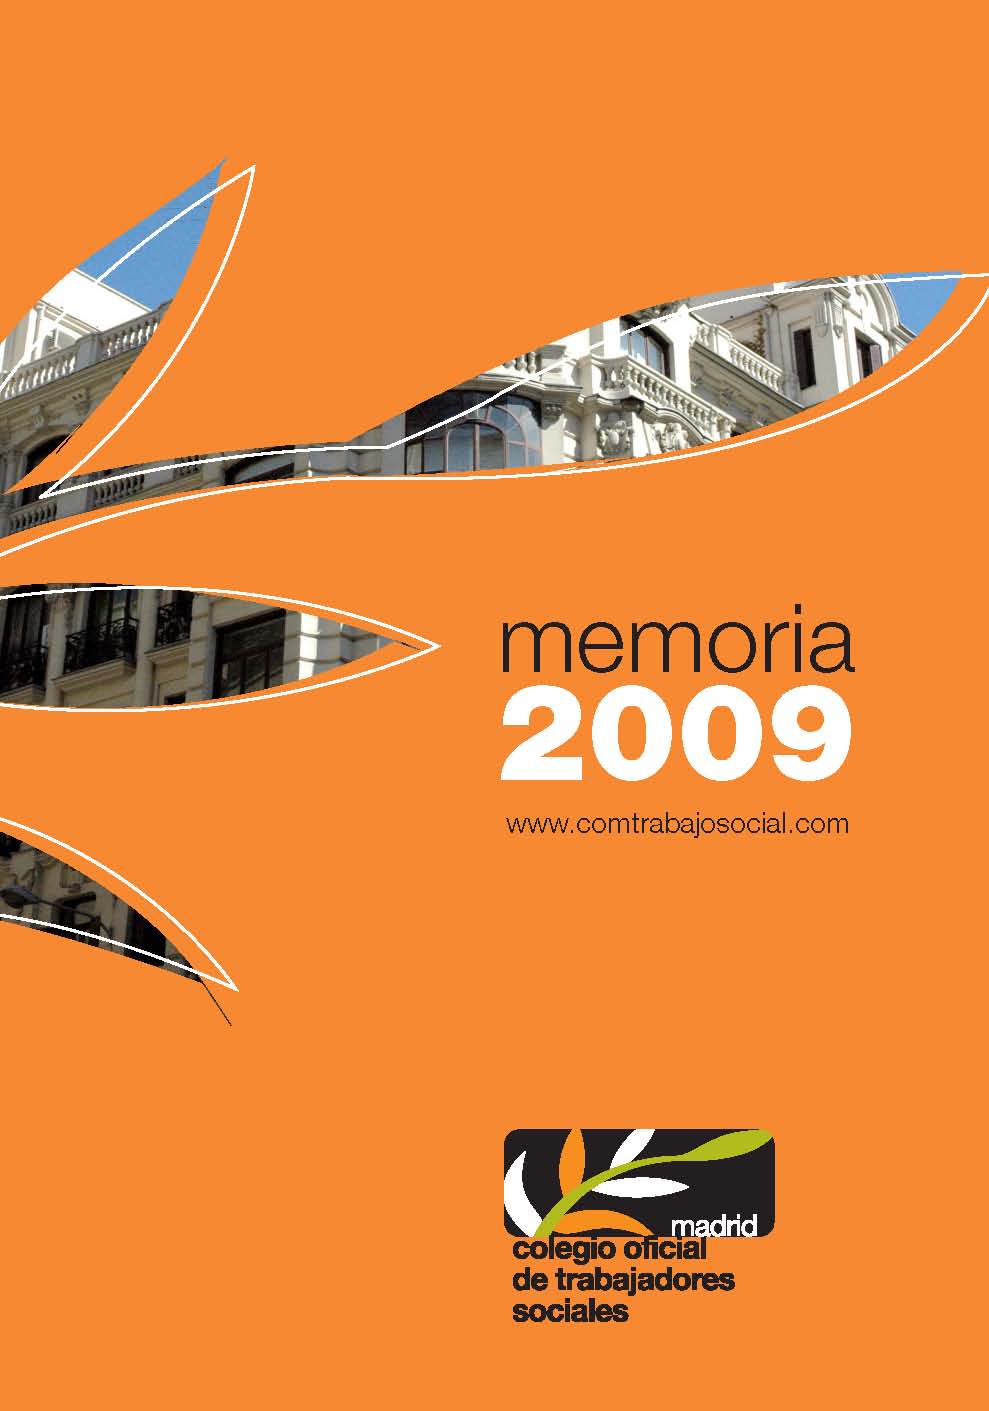 Memoria navegable 2009. | Noticia